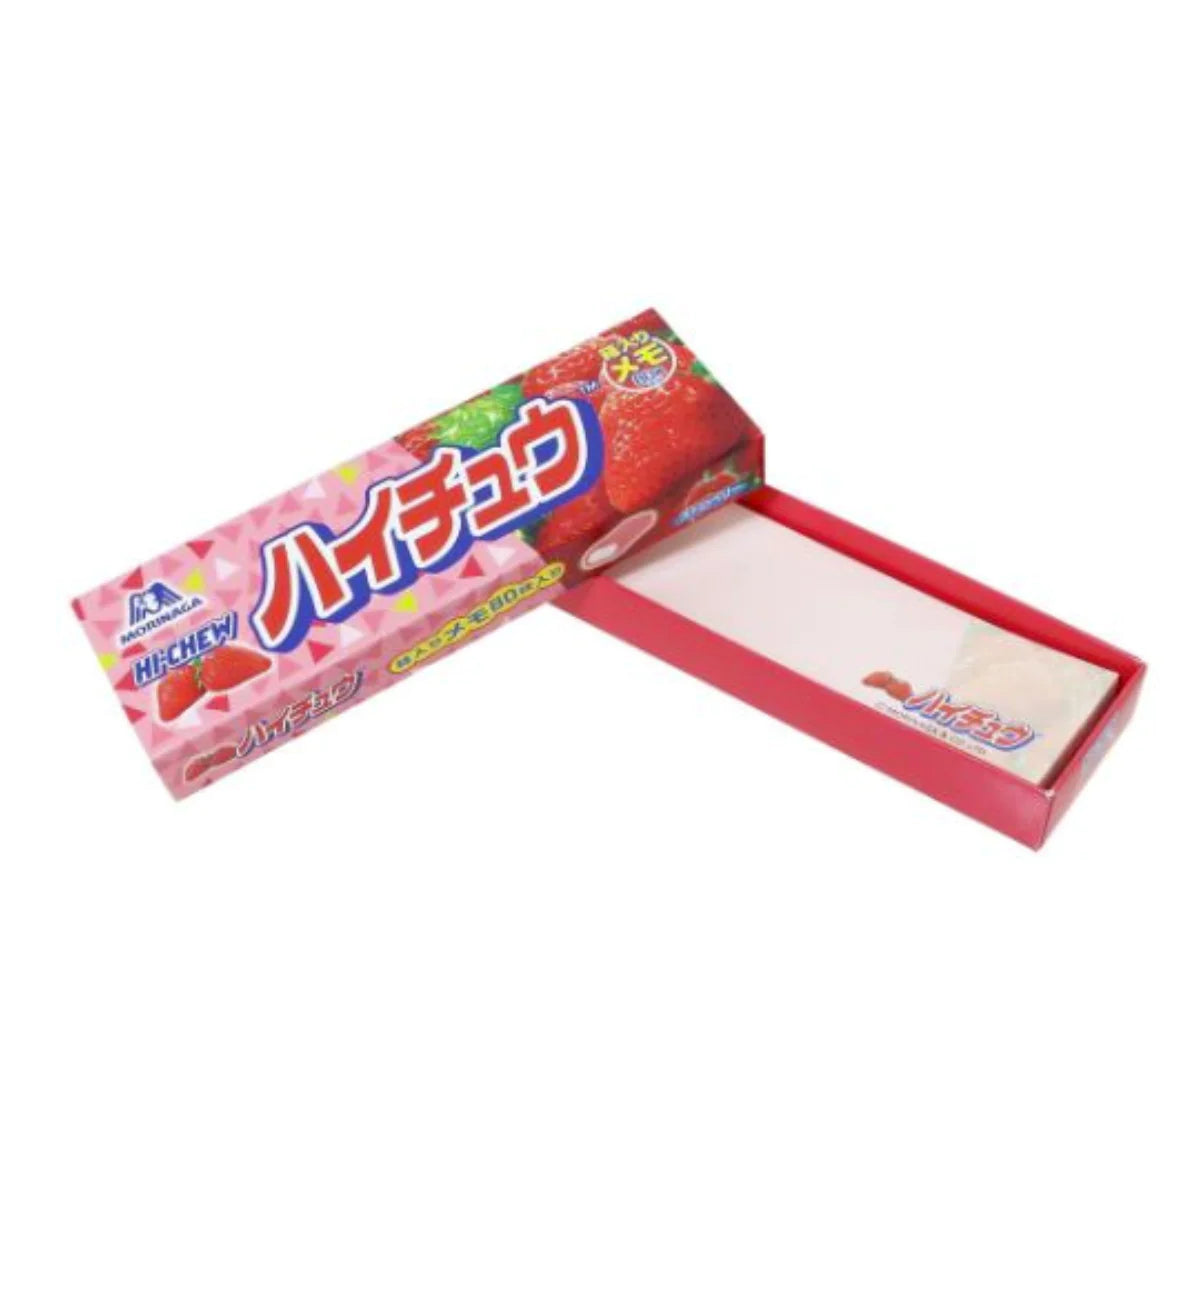 Sweets Series Box Memopad: Hi-Chew Strawberry